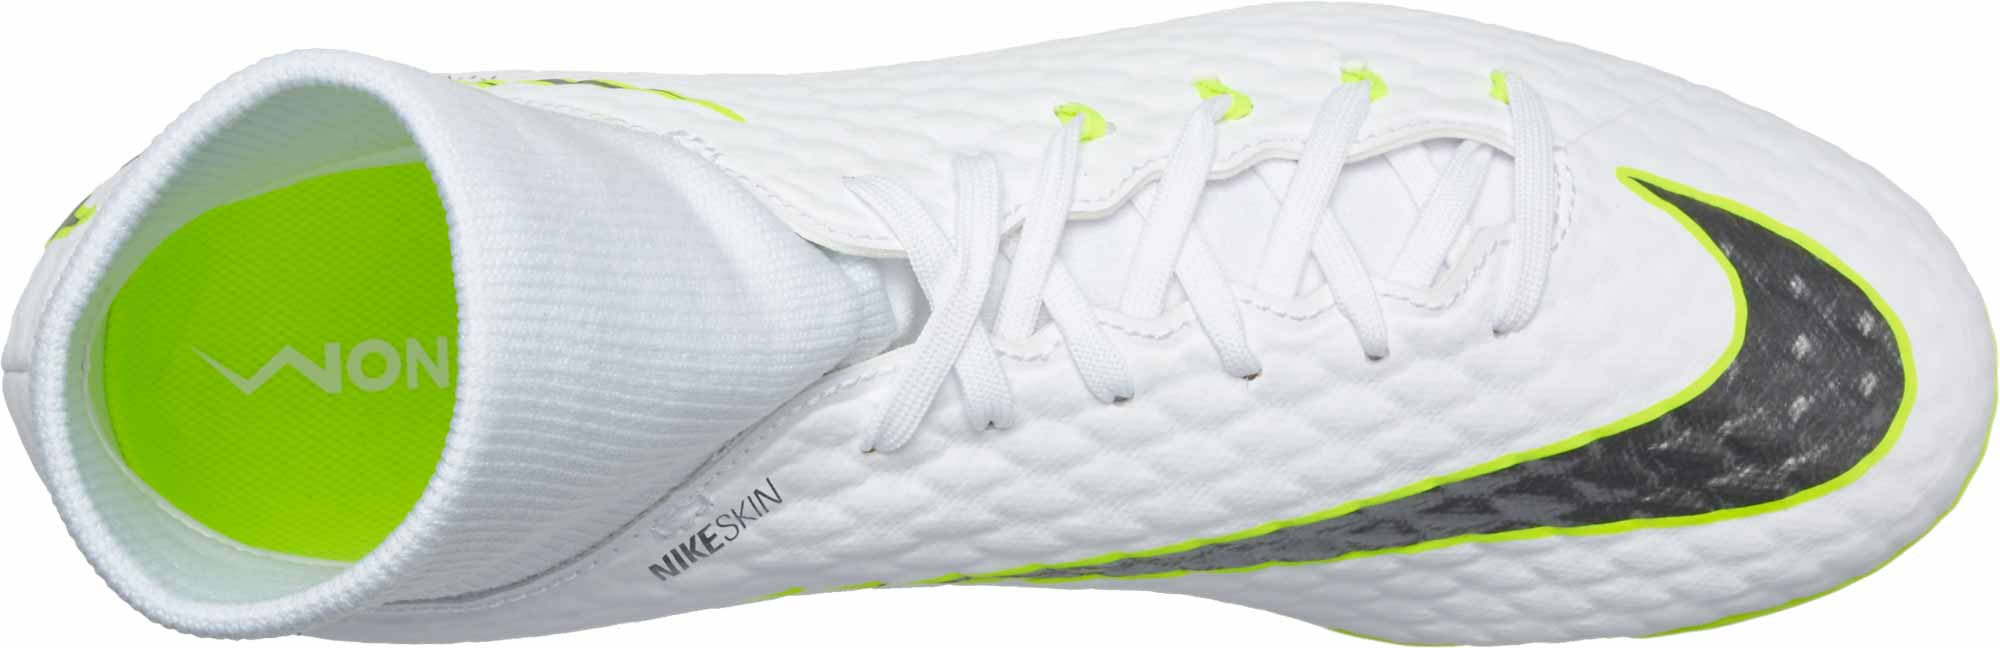 Nike Hypervenom III Pro DF AG Pro Mens Boots Artificial